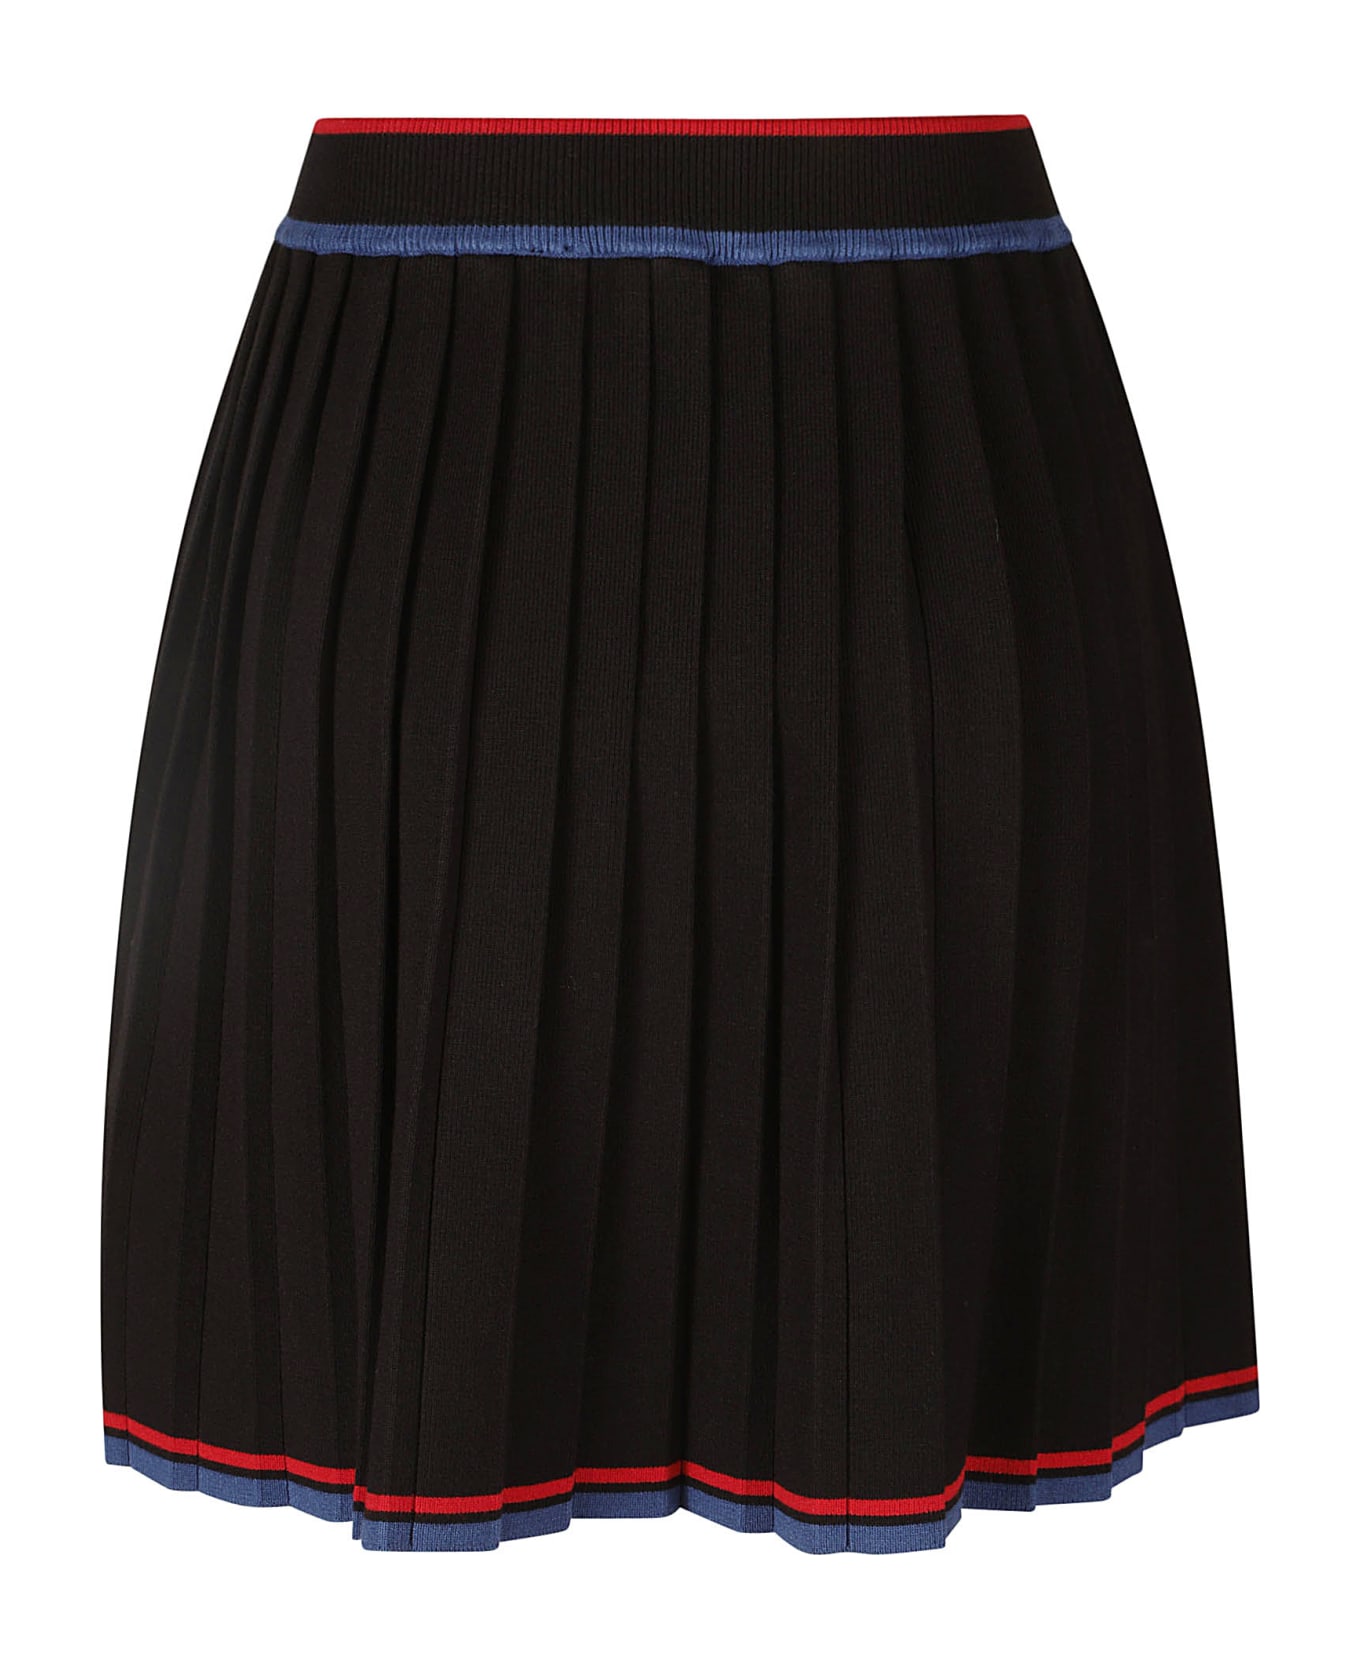 GCDS Pleated Knit Skirt - Black スカート